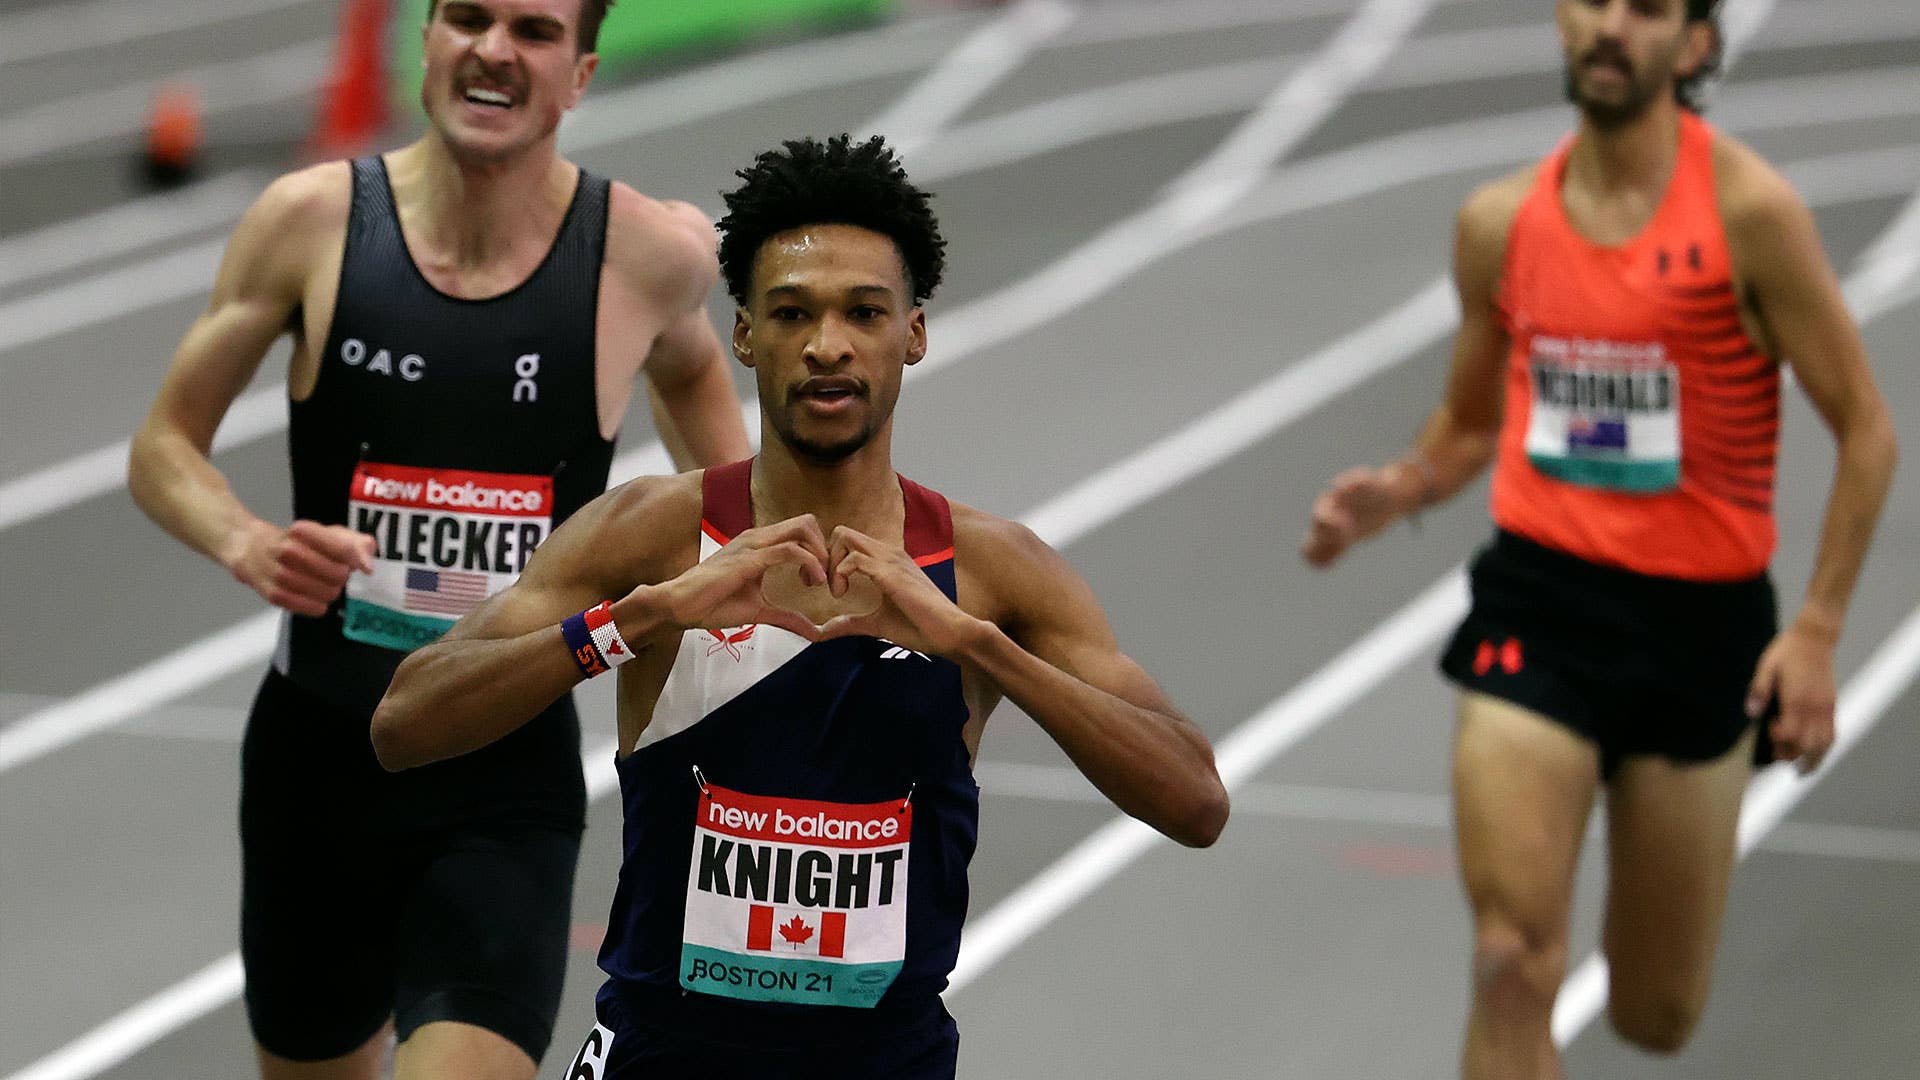 Toronto long-distance runner Justyn Knight